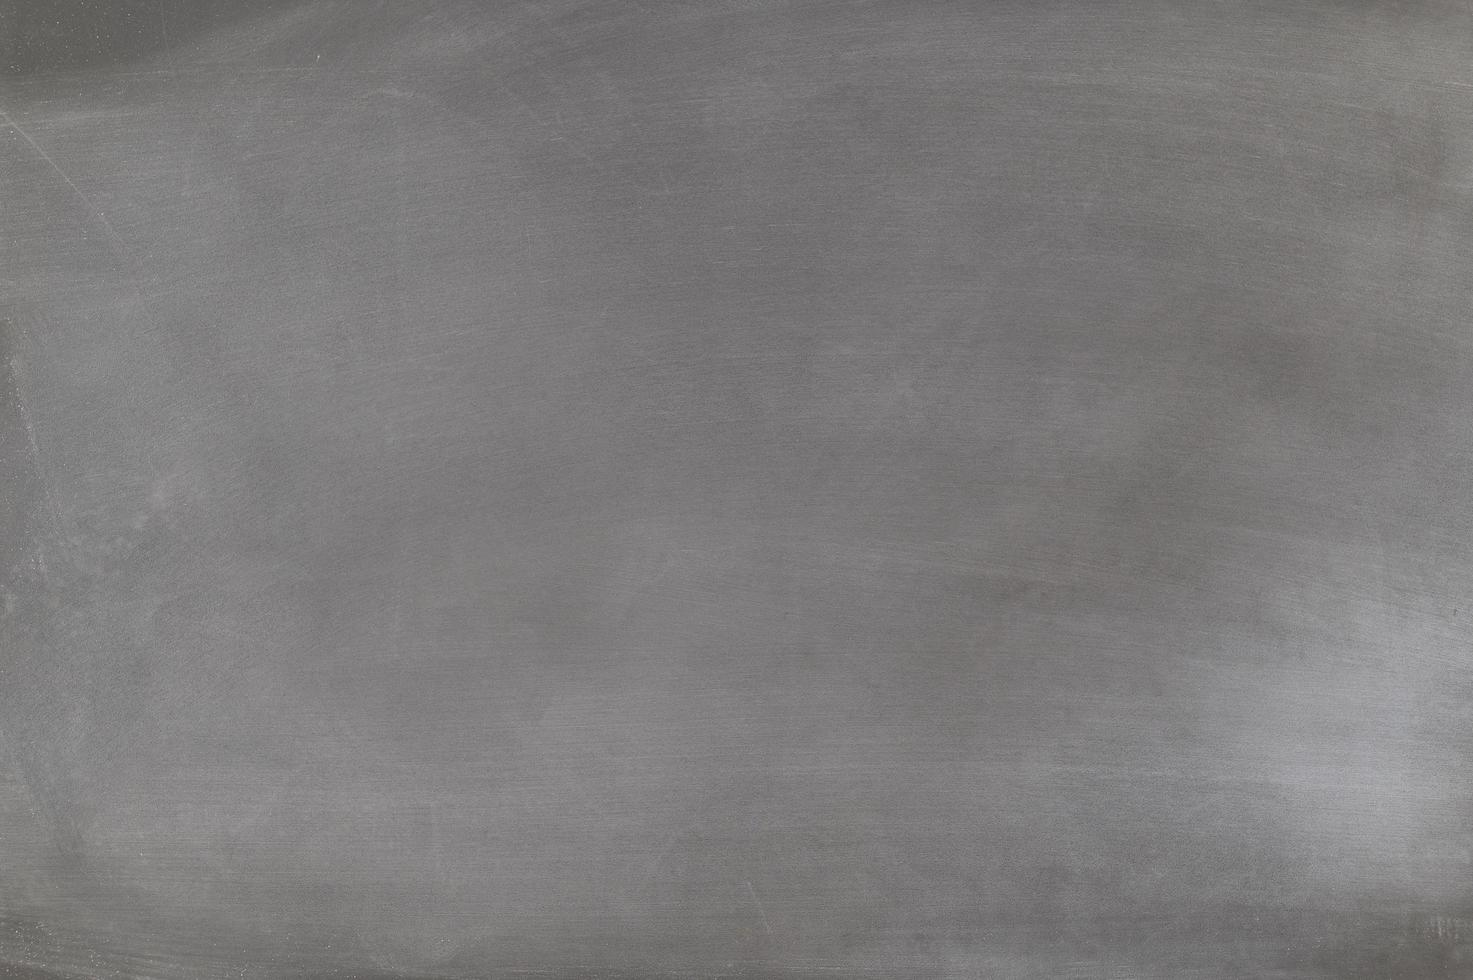 Empty black chalkboard photo